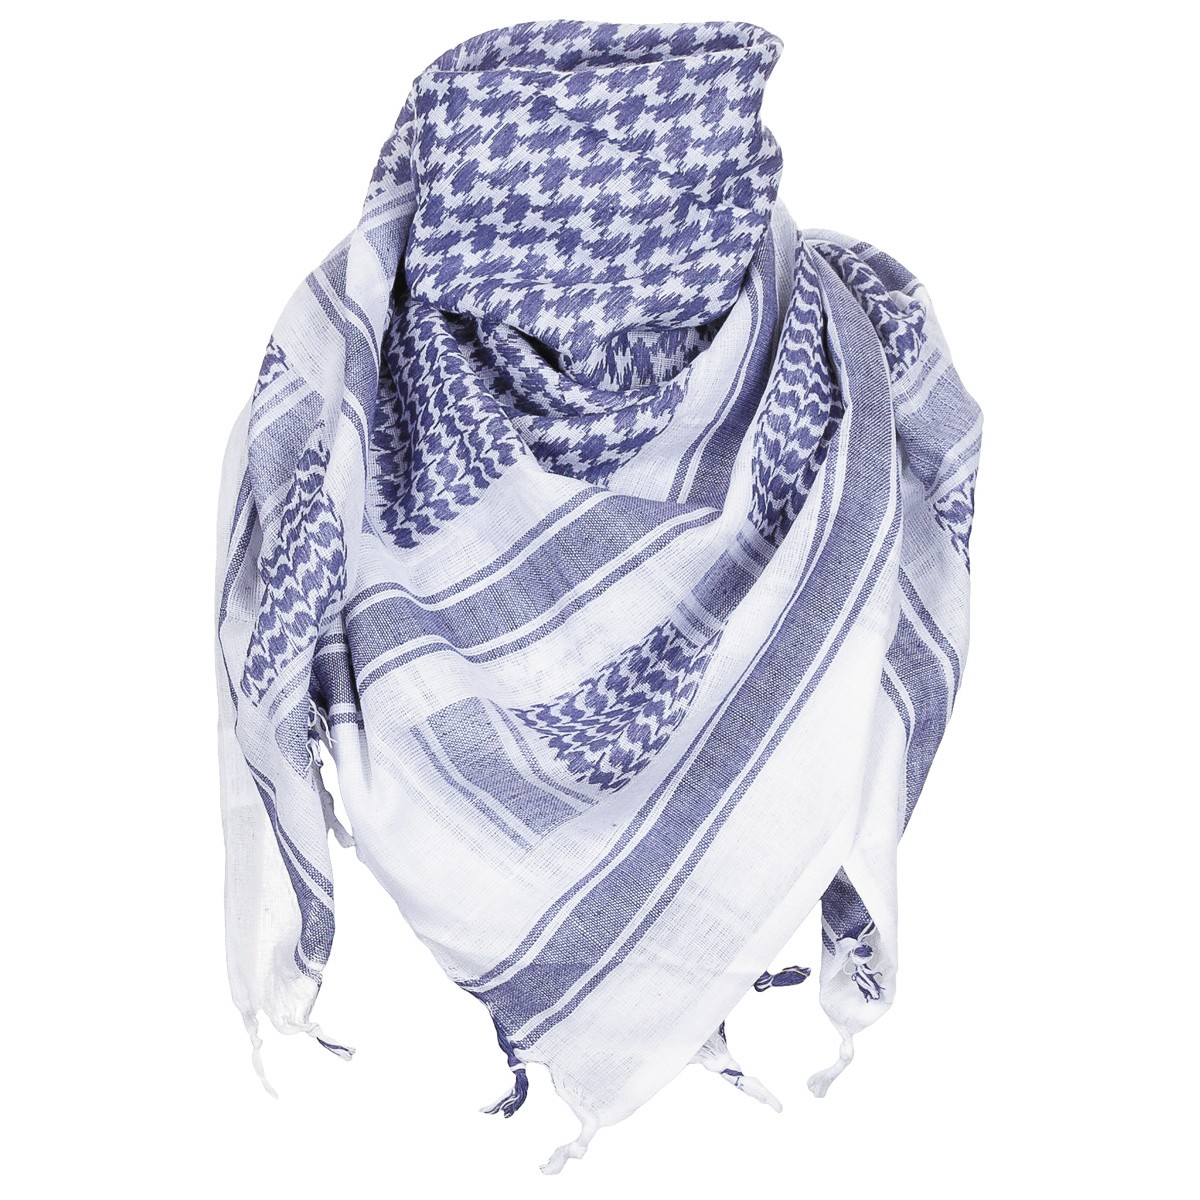 Šátek Shemagh MFH - modrý-bílý